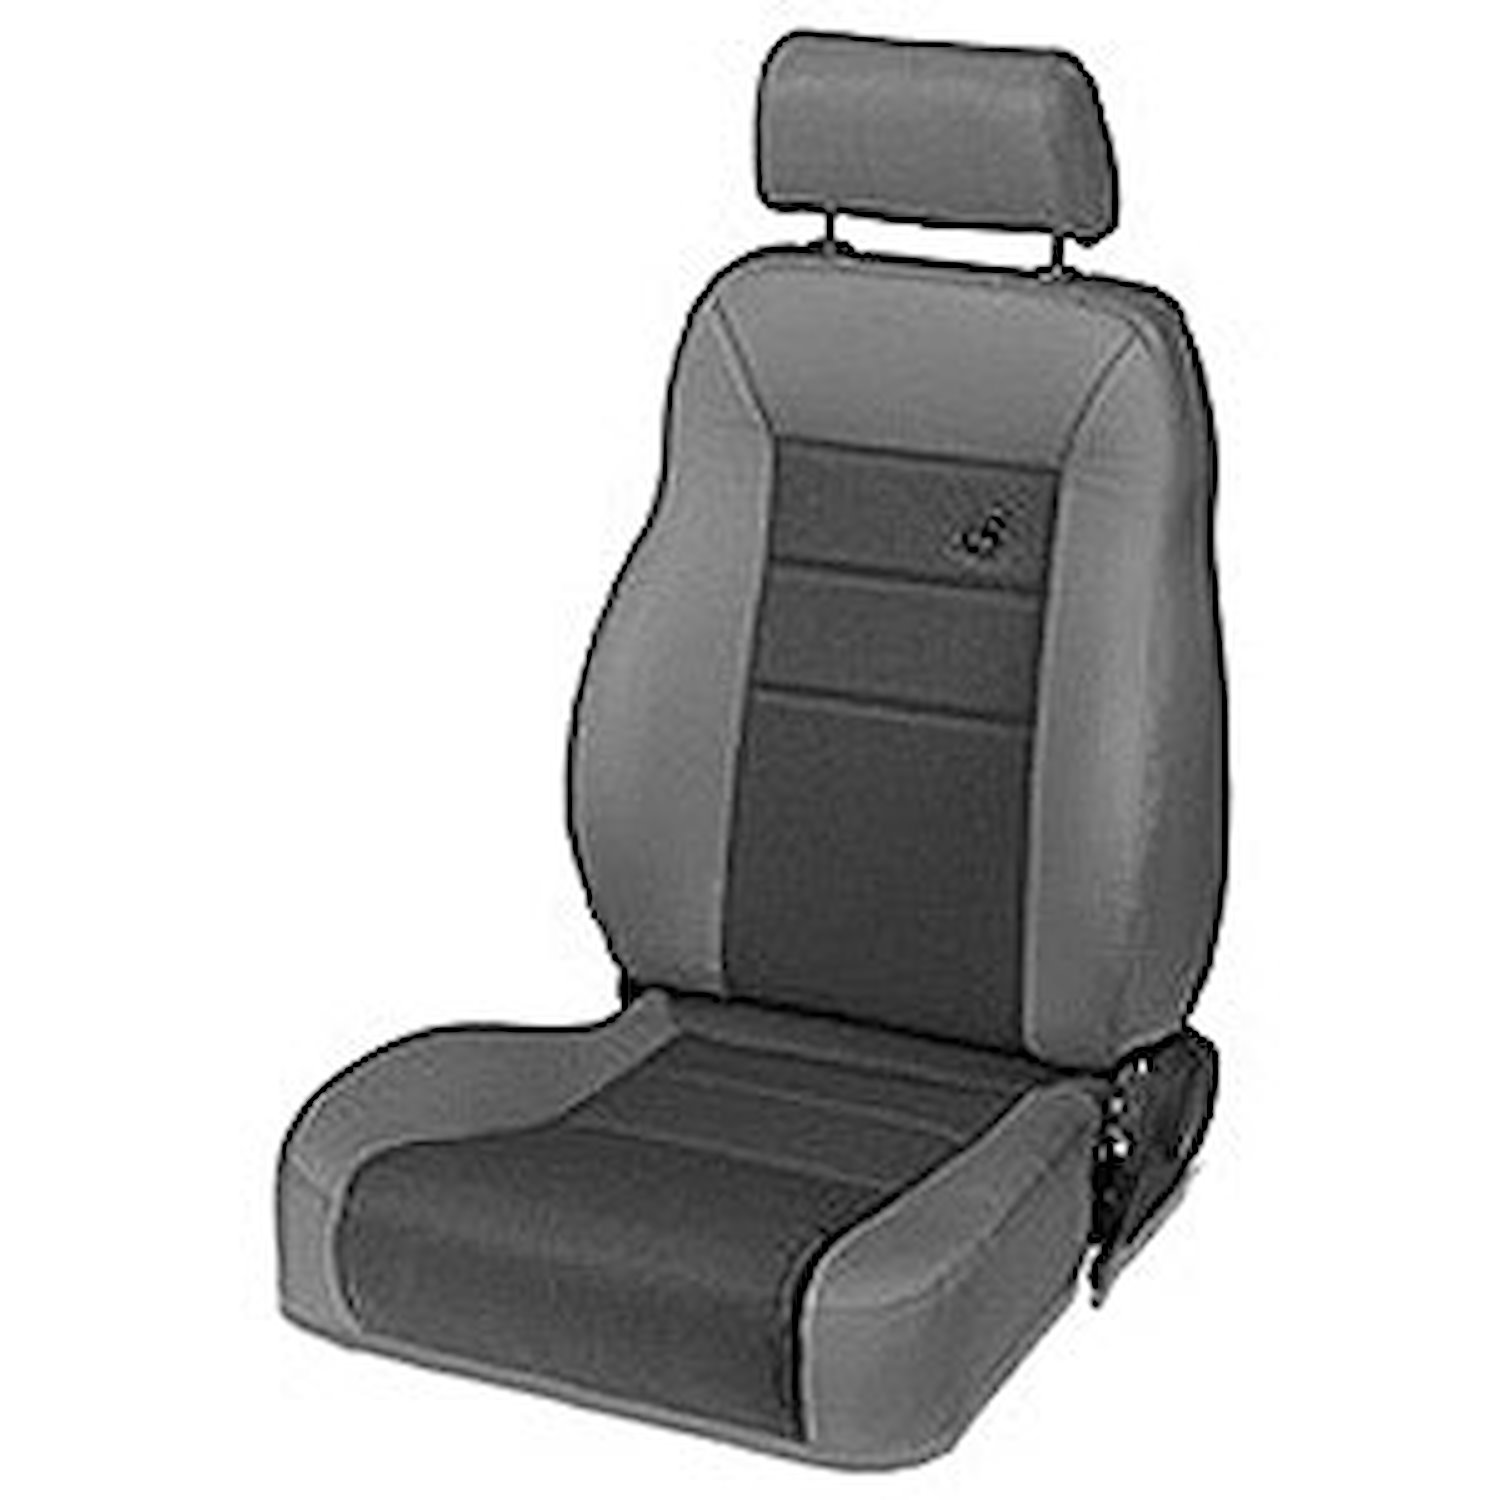 Trailmax II Pro Seat, Charcoal, Front, High-Back, Vinyl, w/Center Fabric Insert, Premium Bucket, Driver Side,